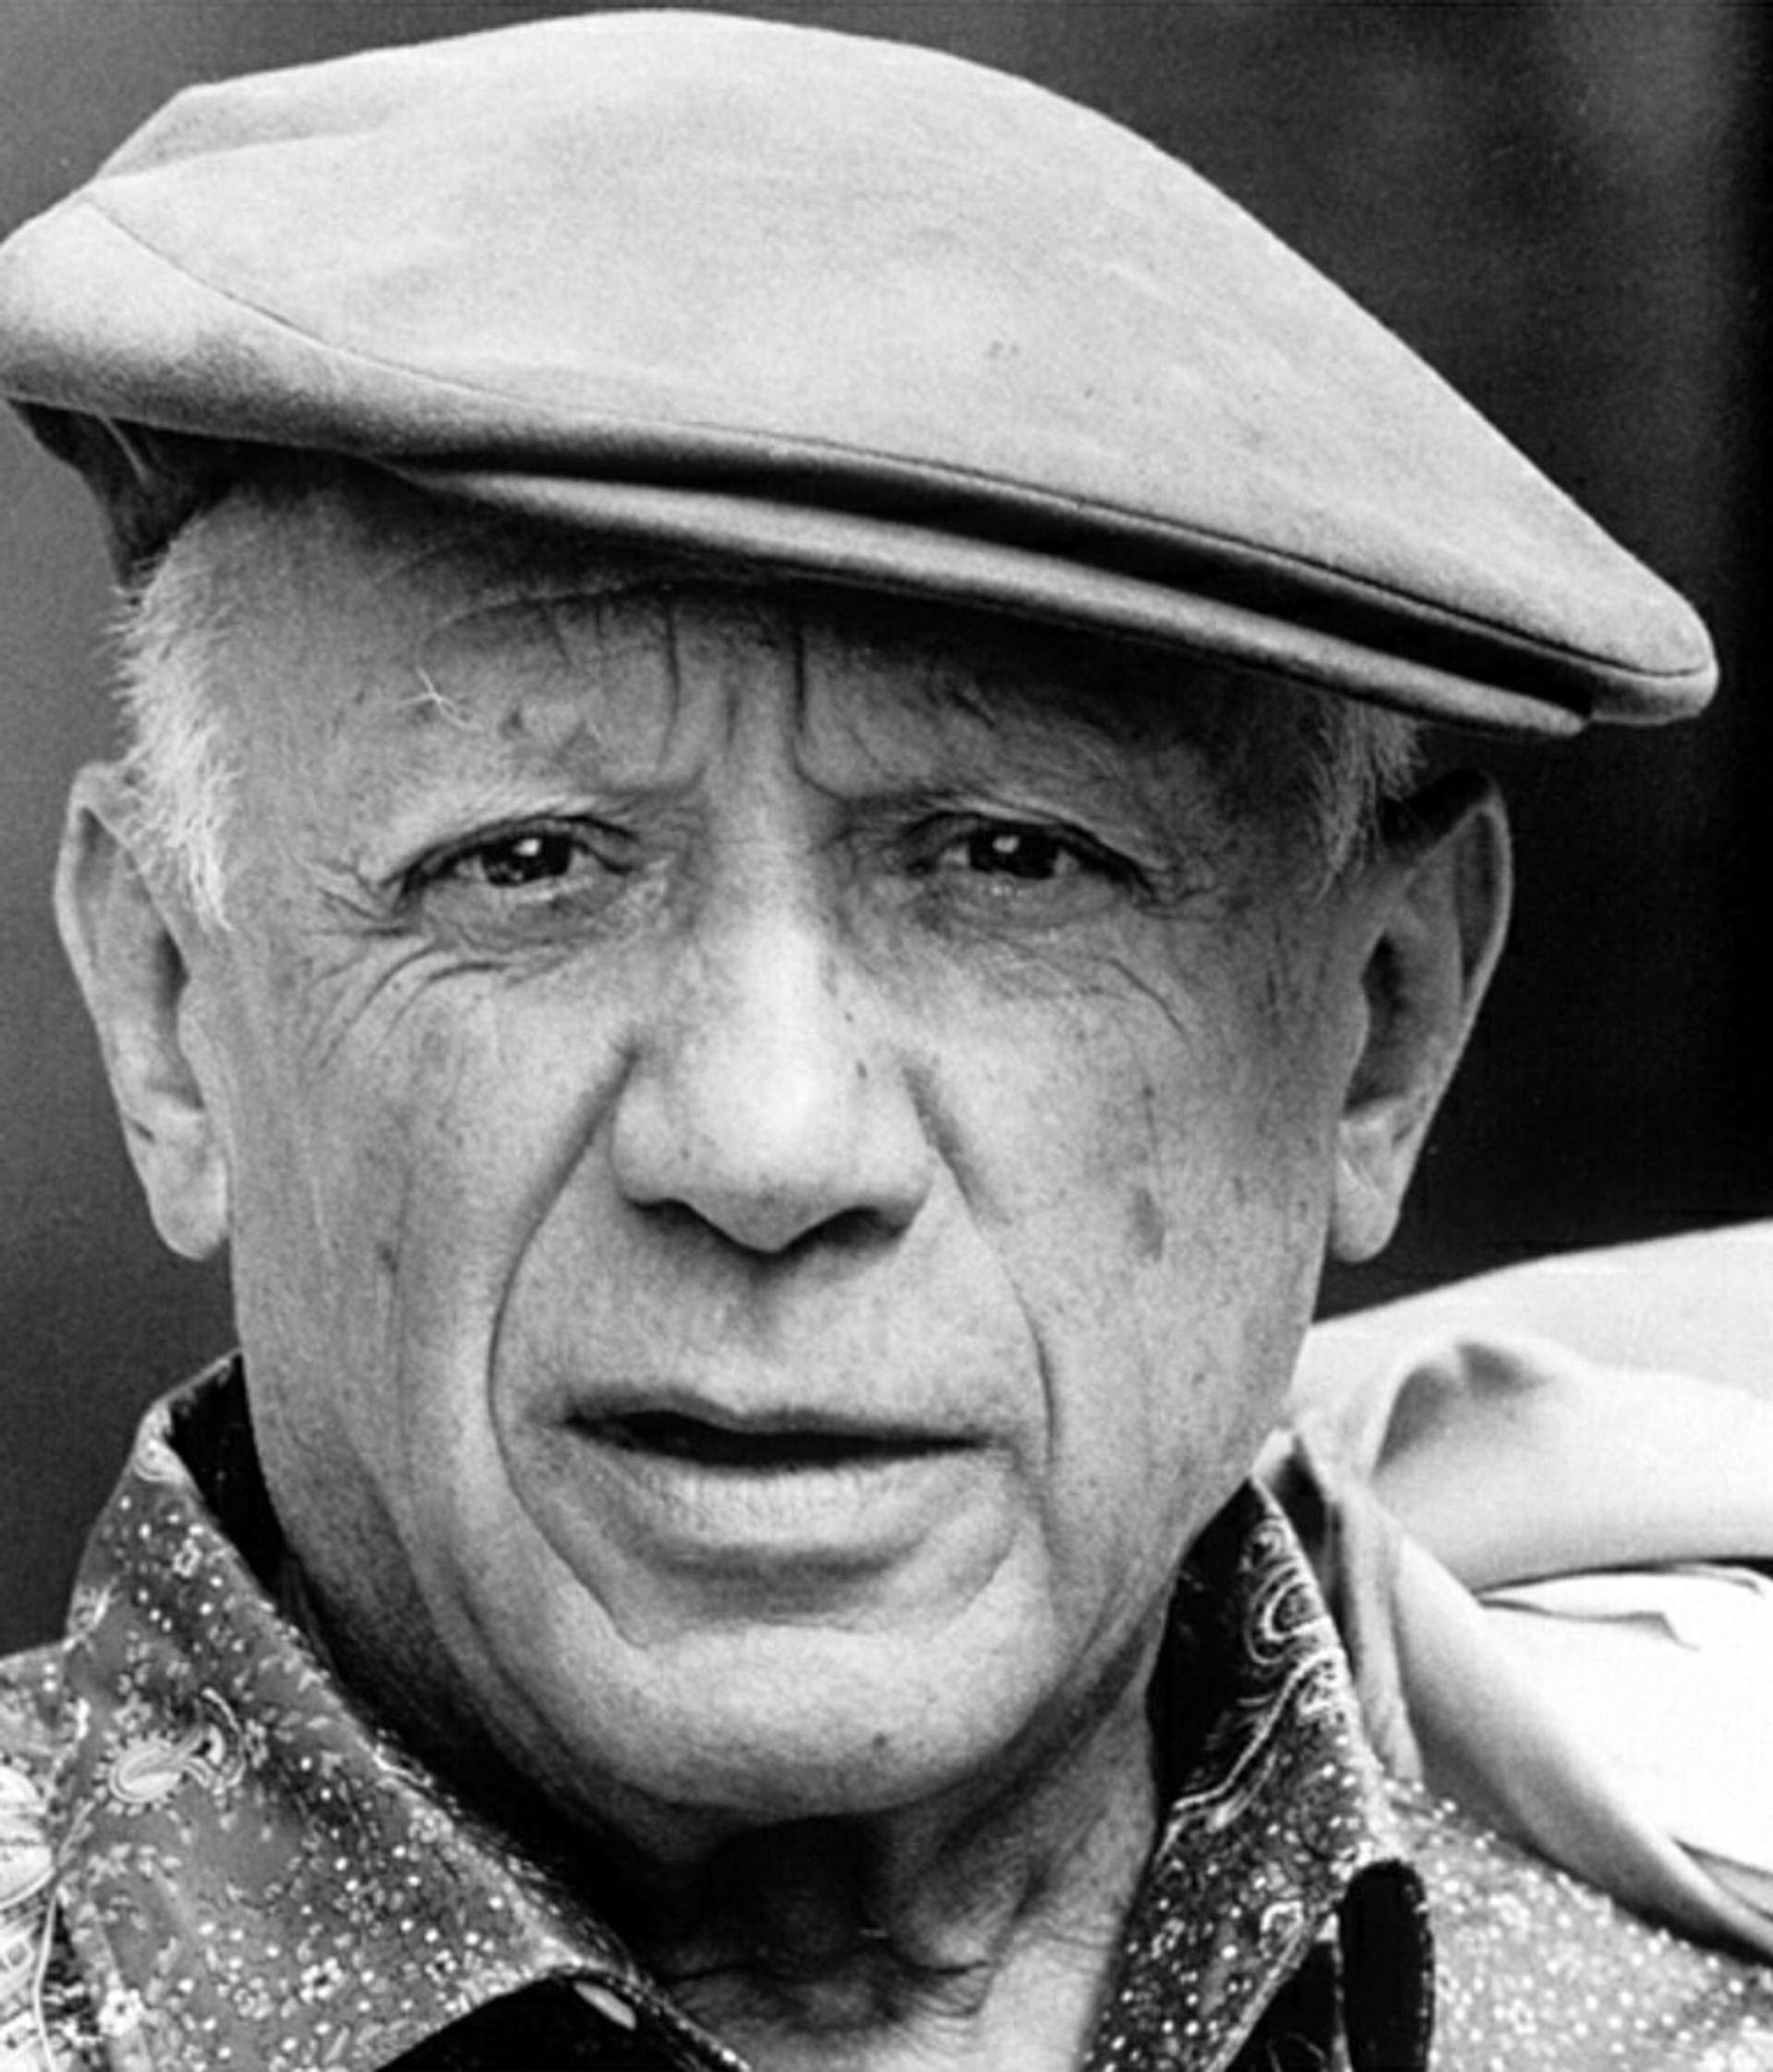 Black and white photographic portrait of Pablo Picasso.